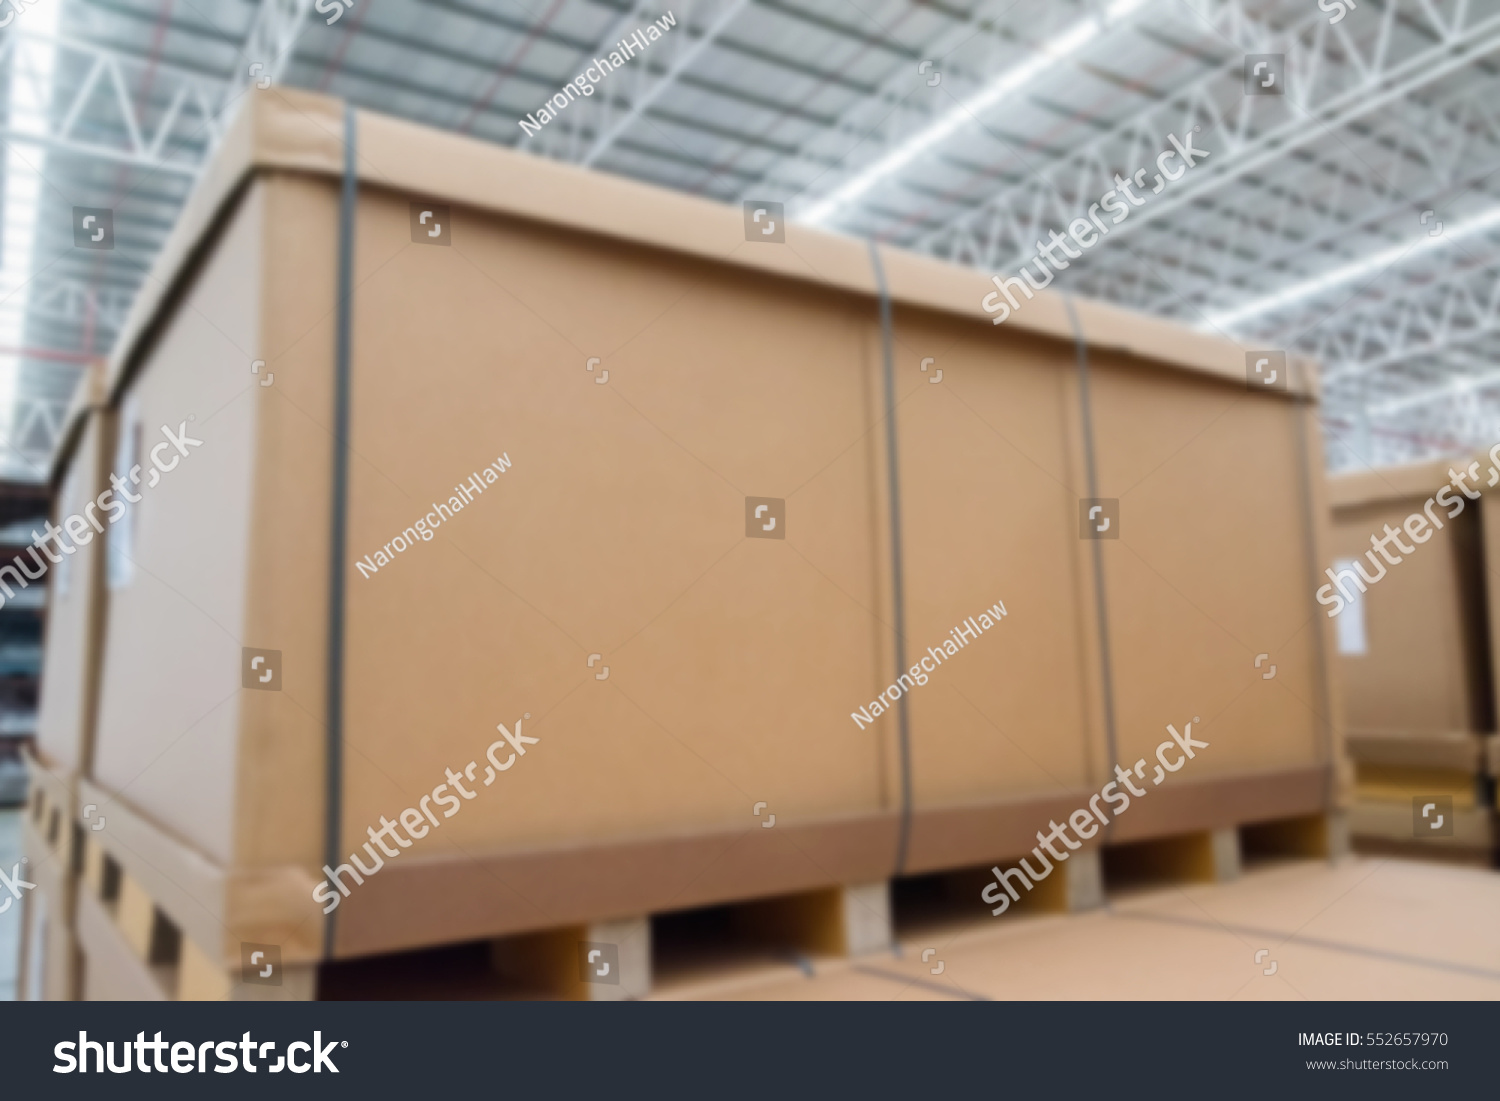 huge cardboard boxes